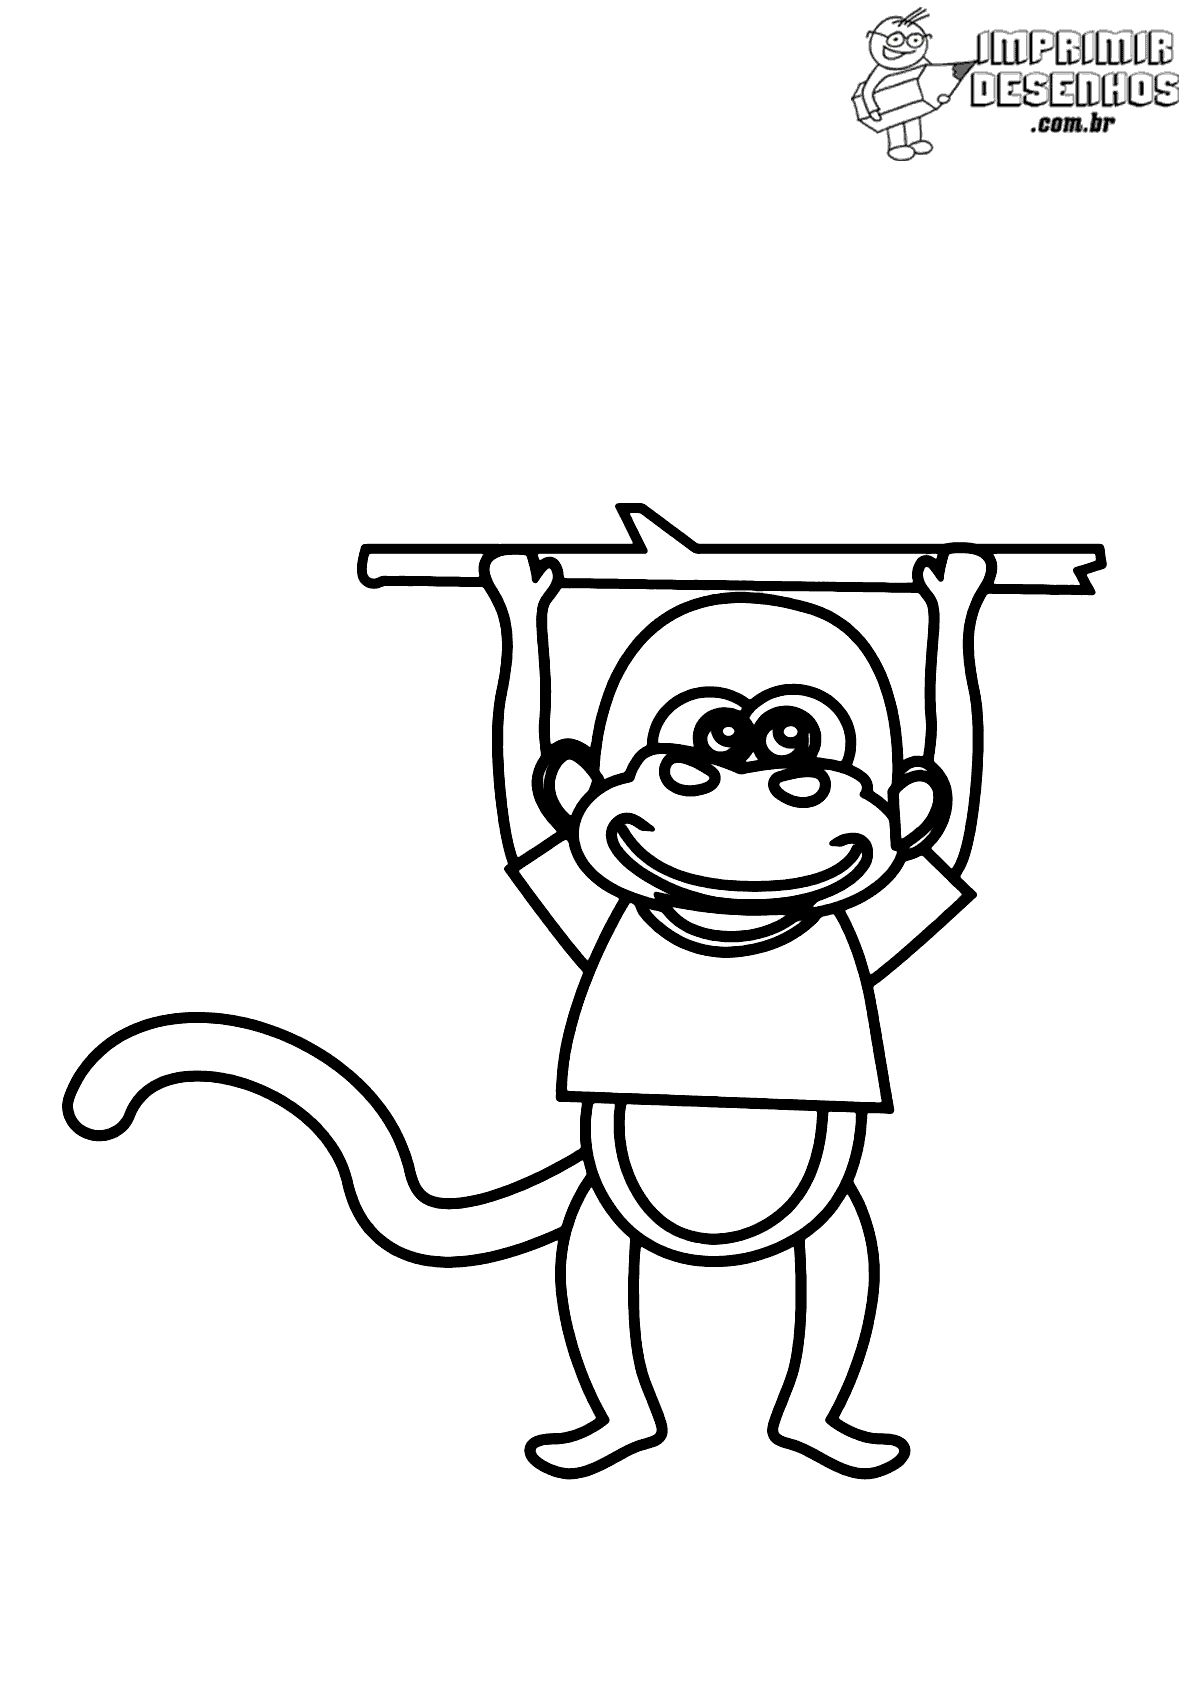 Modelo de Macaco Pendurado para Imprimir